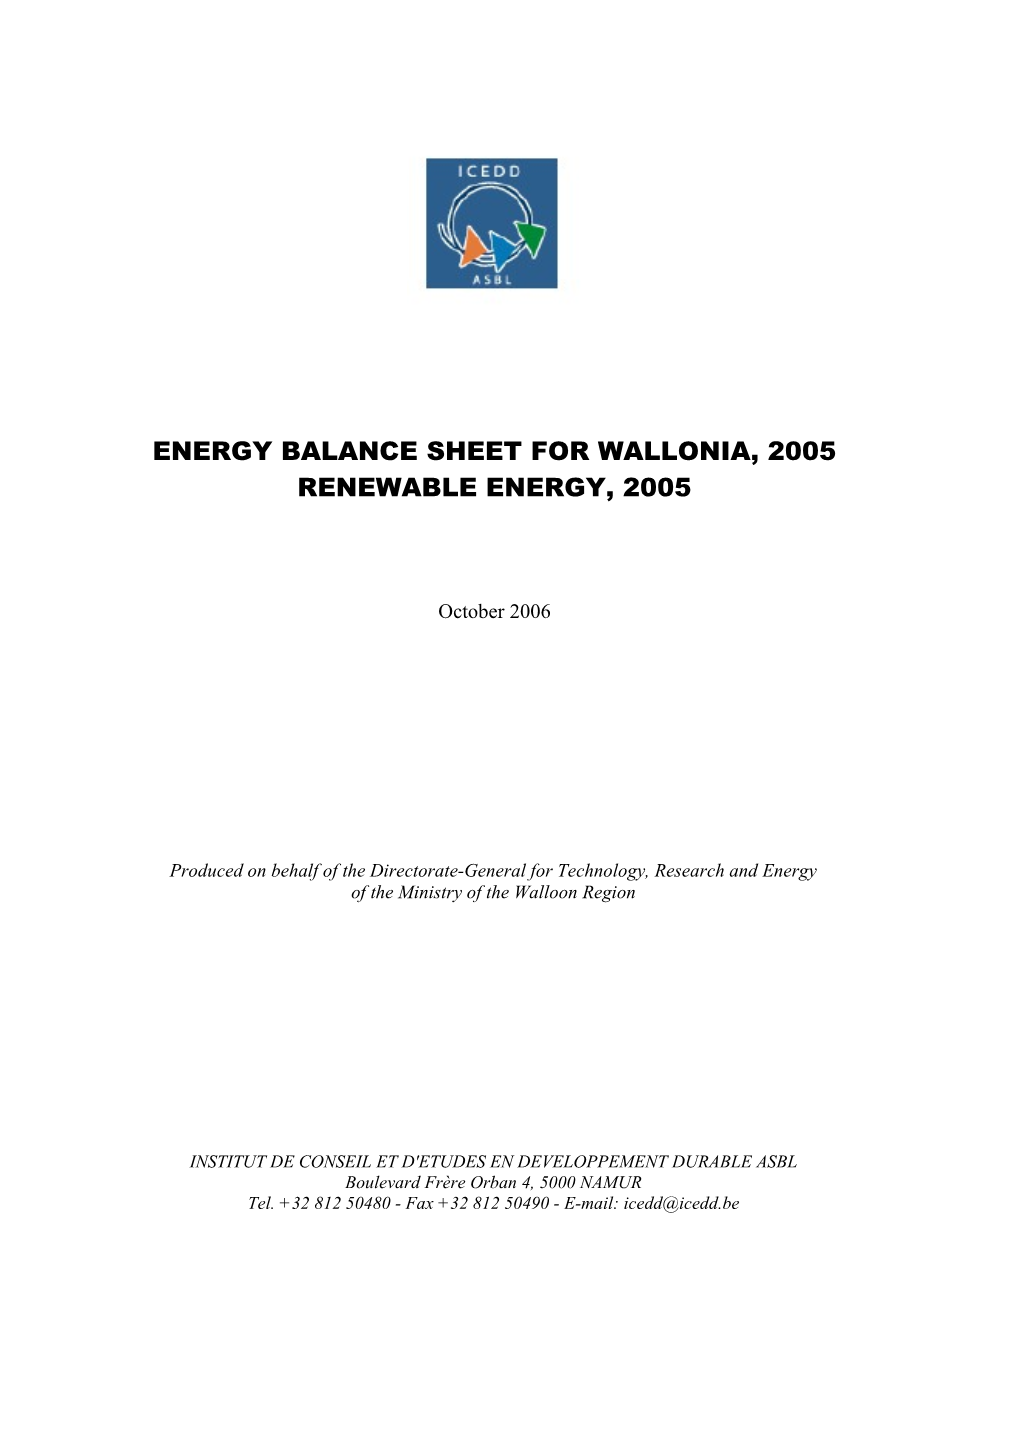 Energy Balance Sheet for Wallonia, 2005